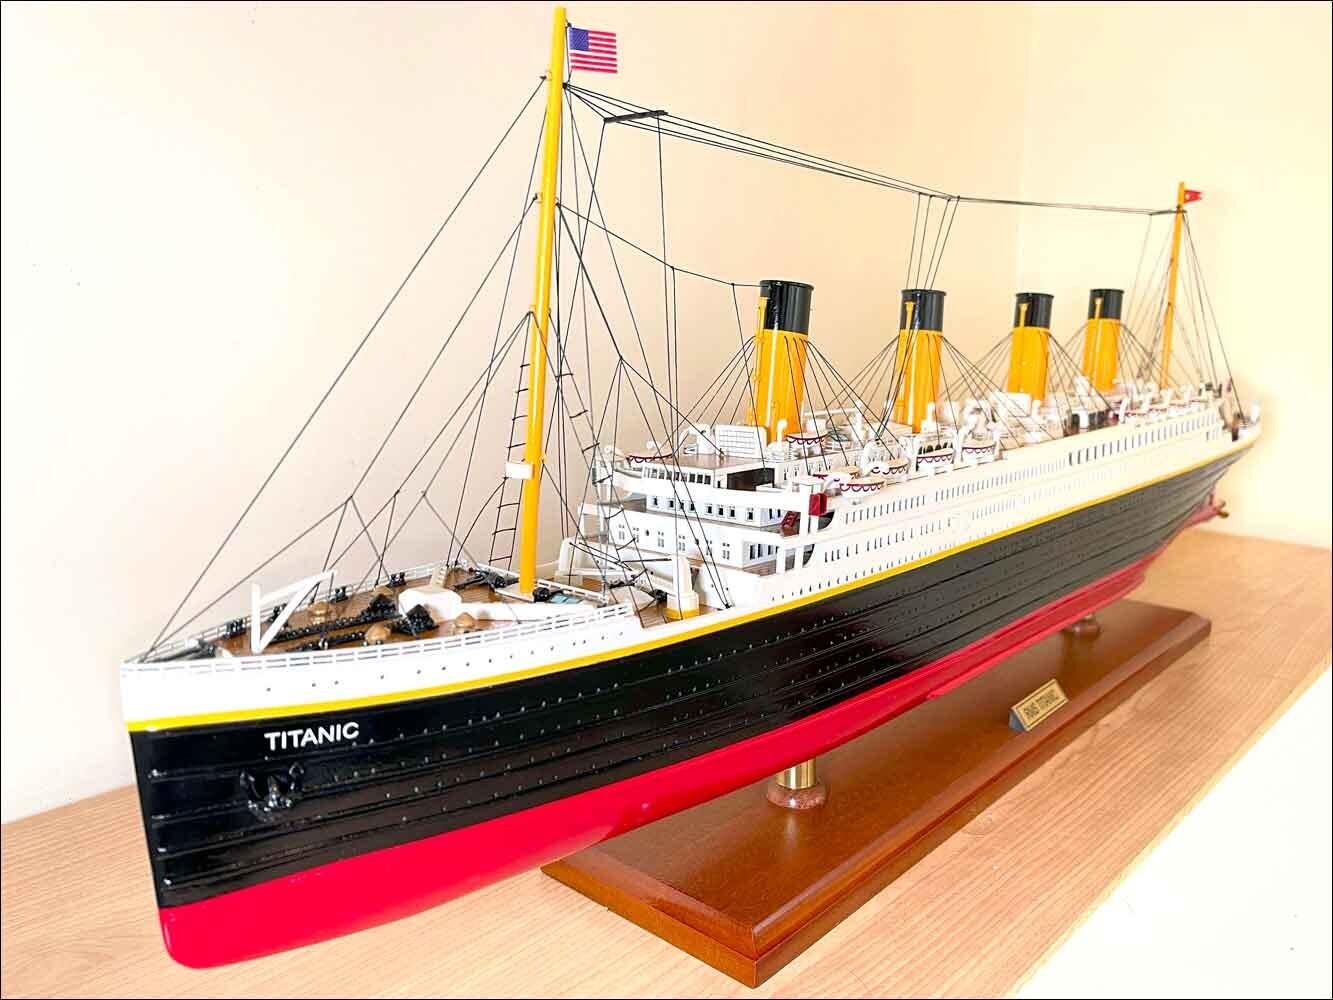 Assembled Titanic model for display